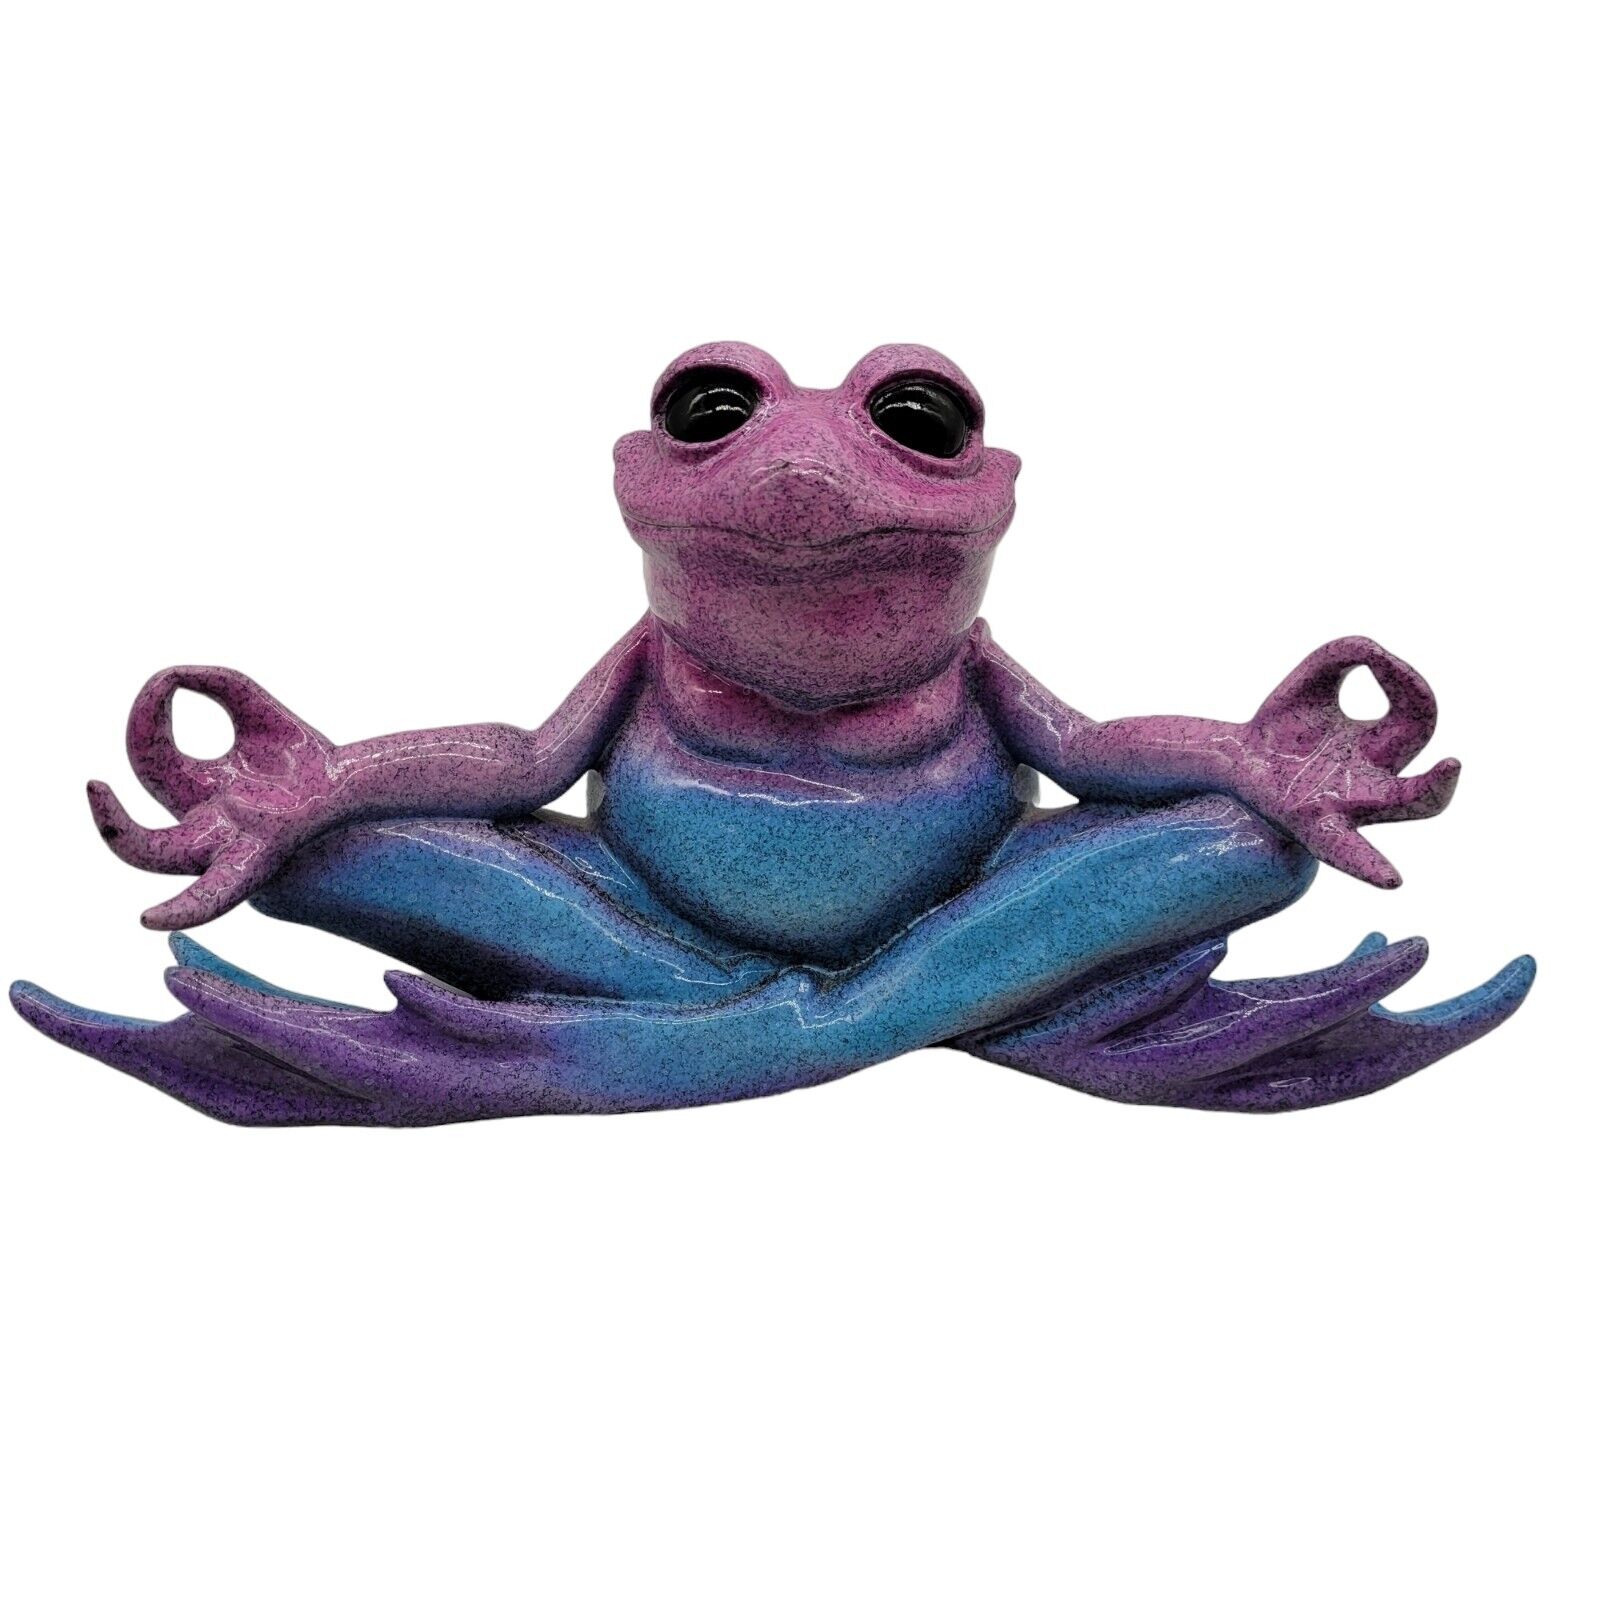 KITTY’S CRITTERS Nirvana Yoga Meditating Nameste Peace Frog Figurine HEAVY